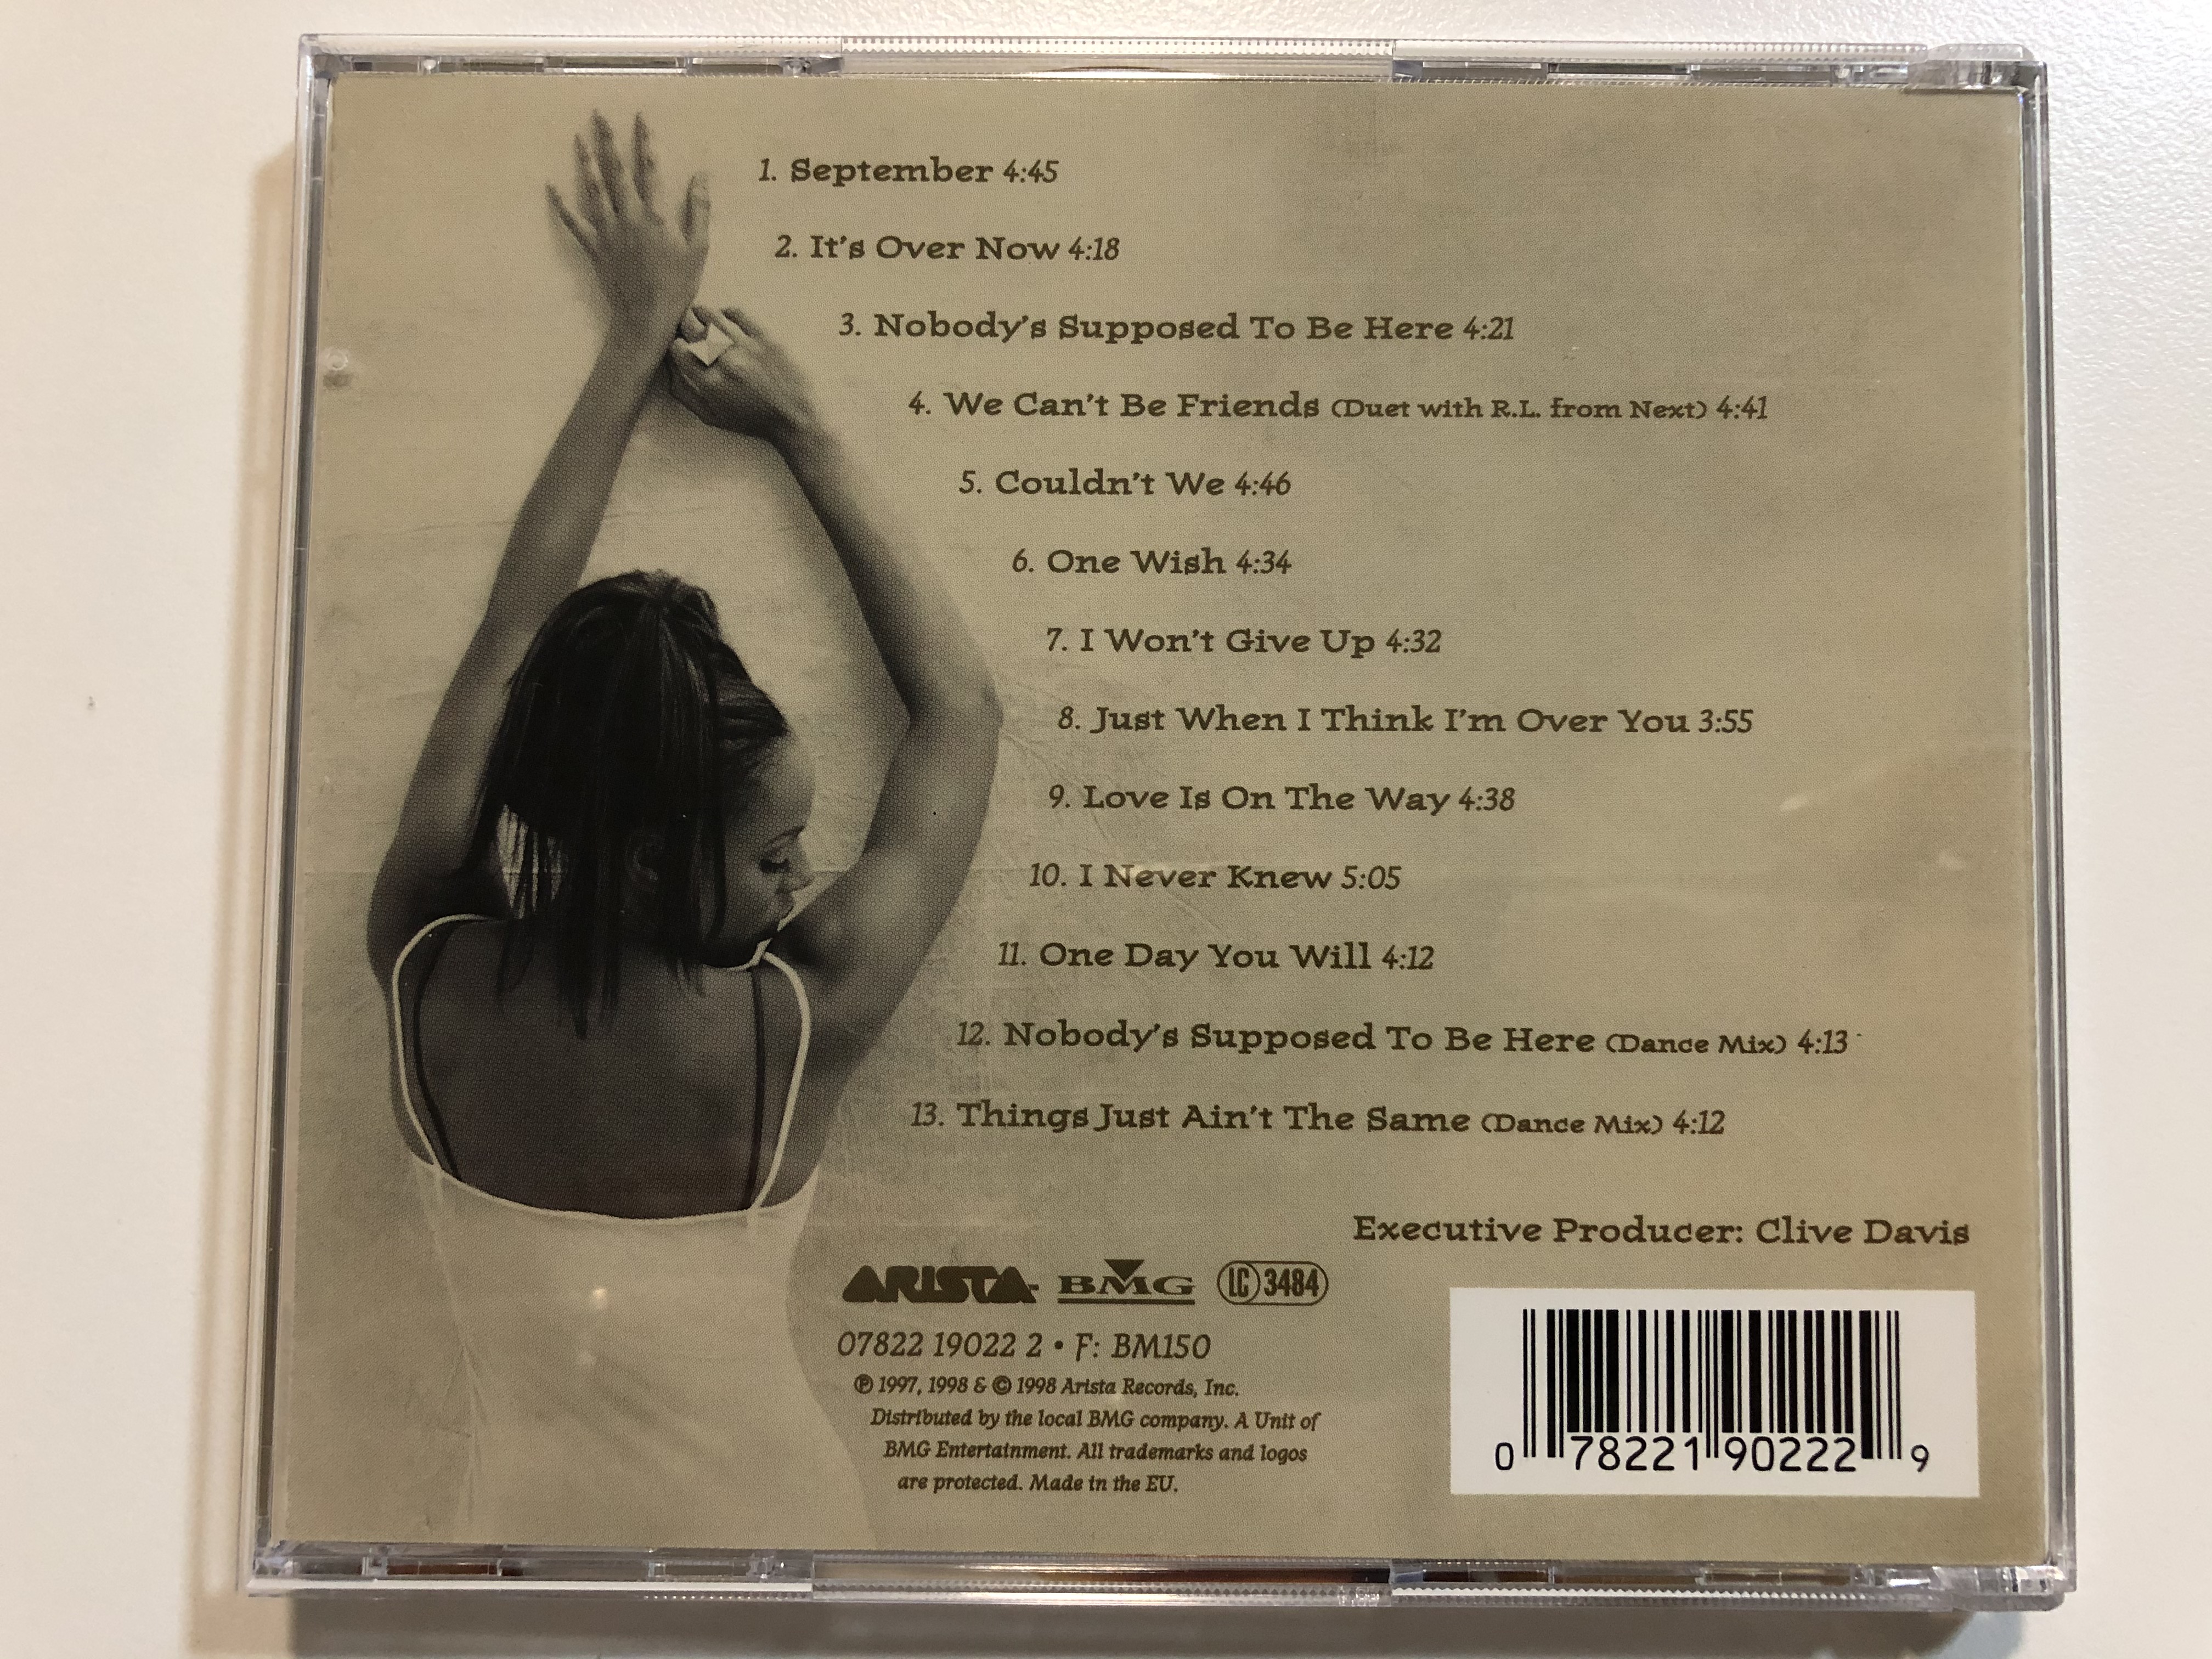 deborah-cox-one-wish-arista-audio-cd-1998-07822-19022-2-2-.jpg